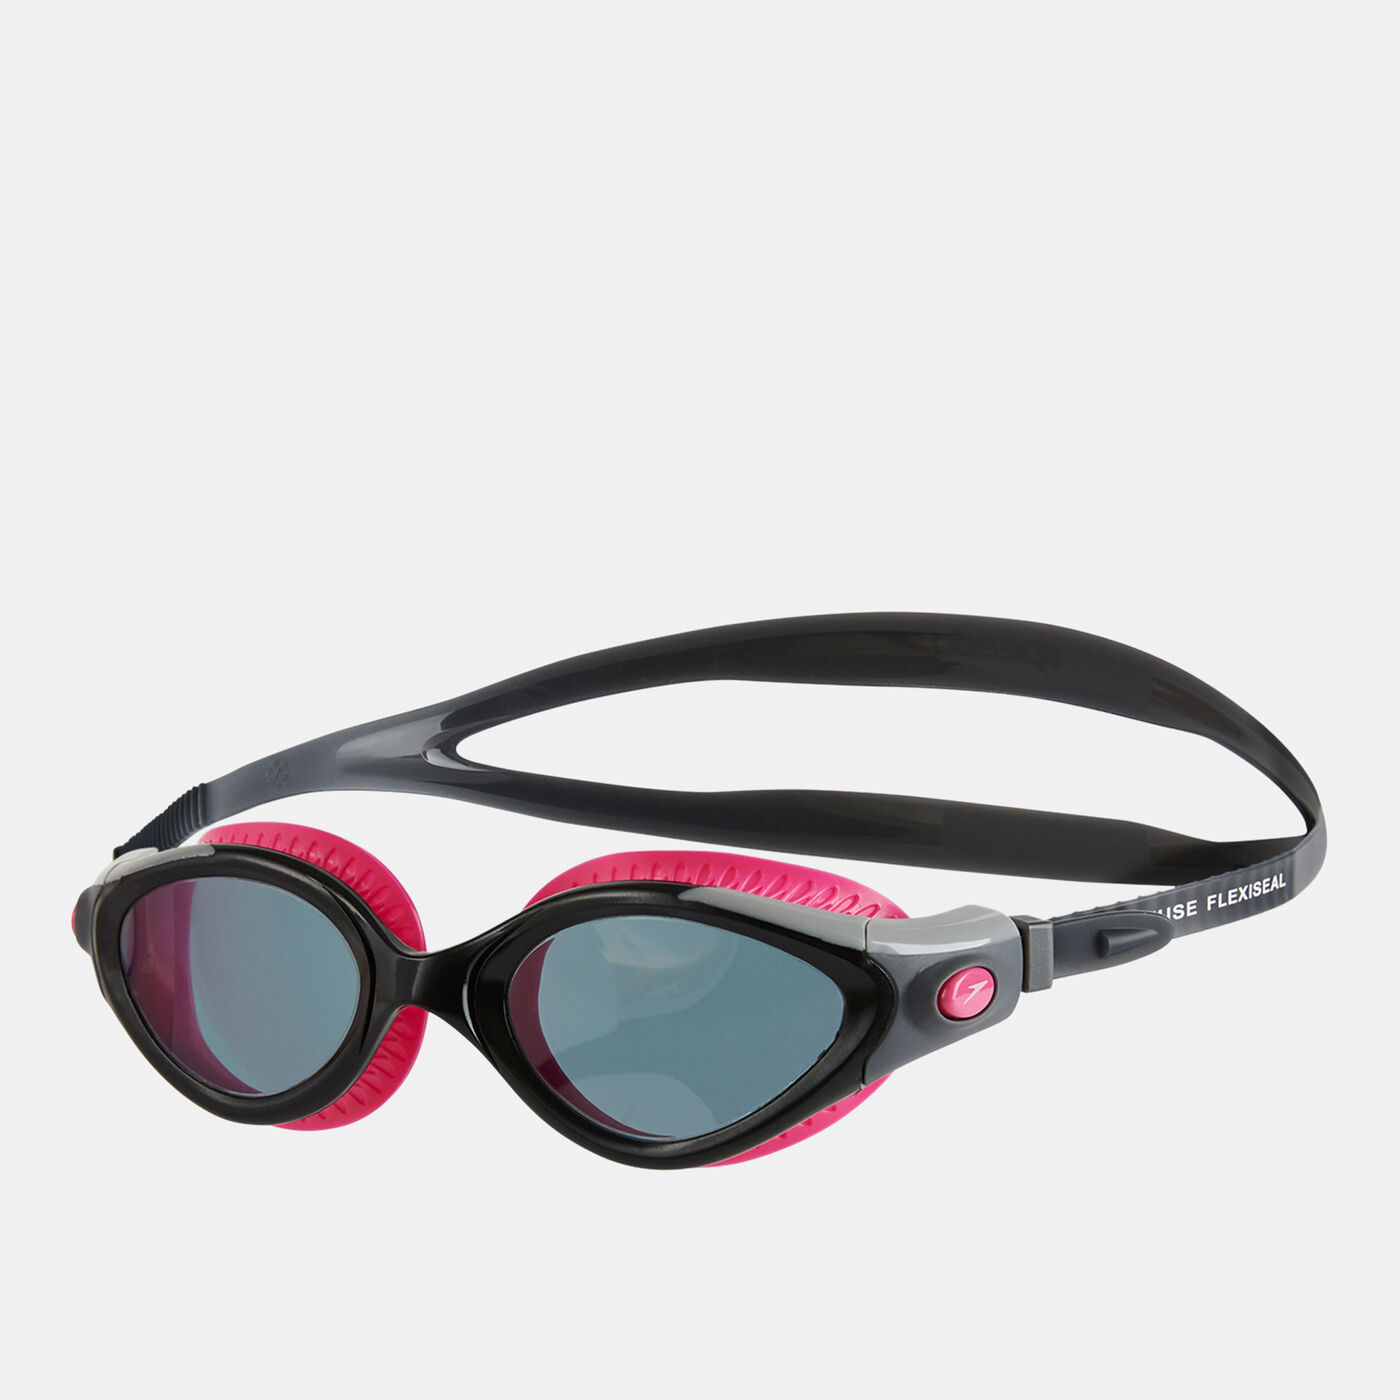 Future Biofuse Flexiseal Goggles